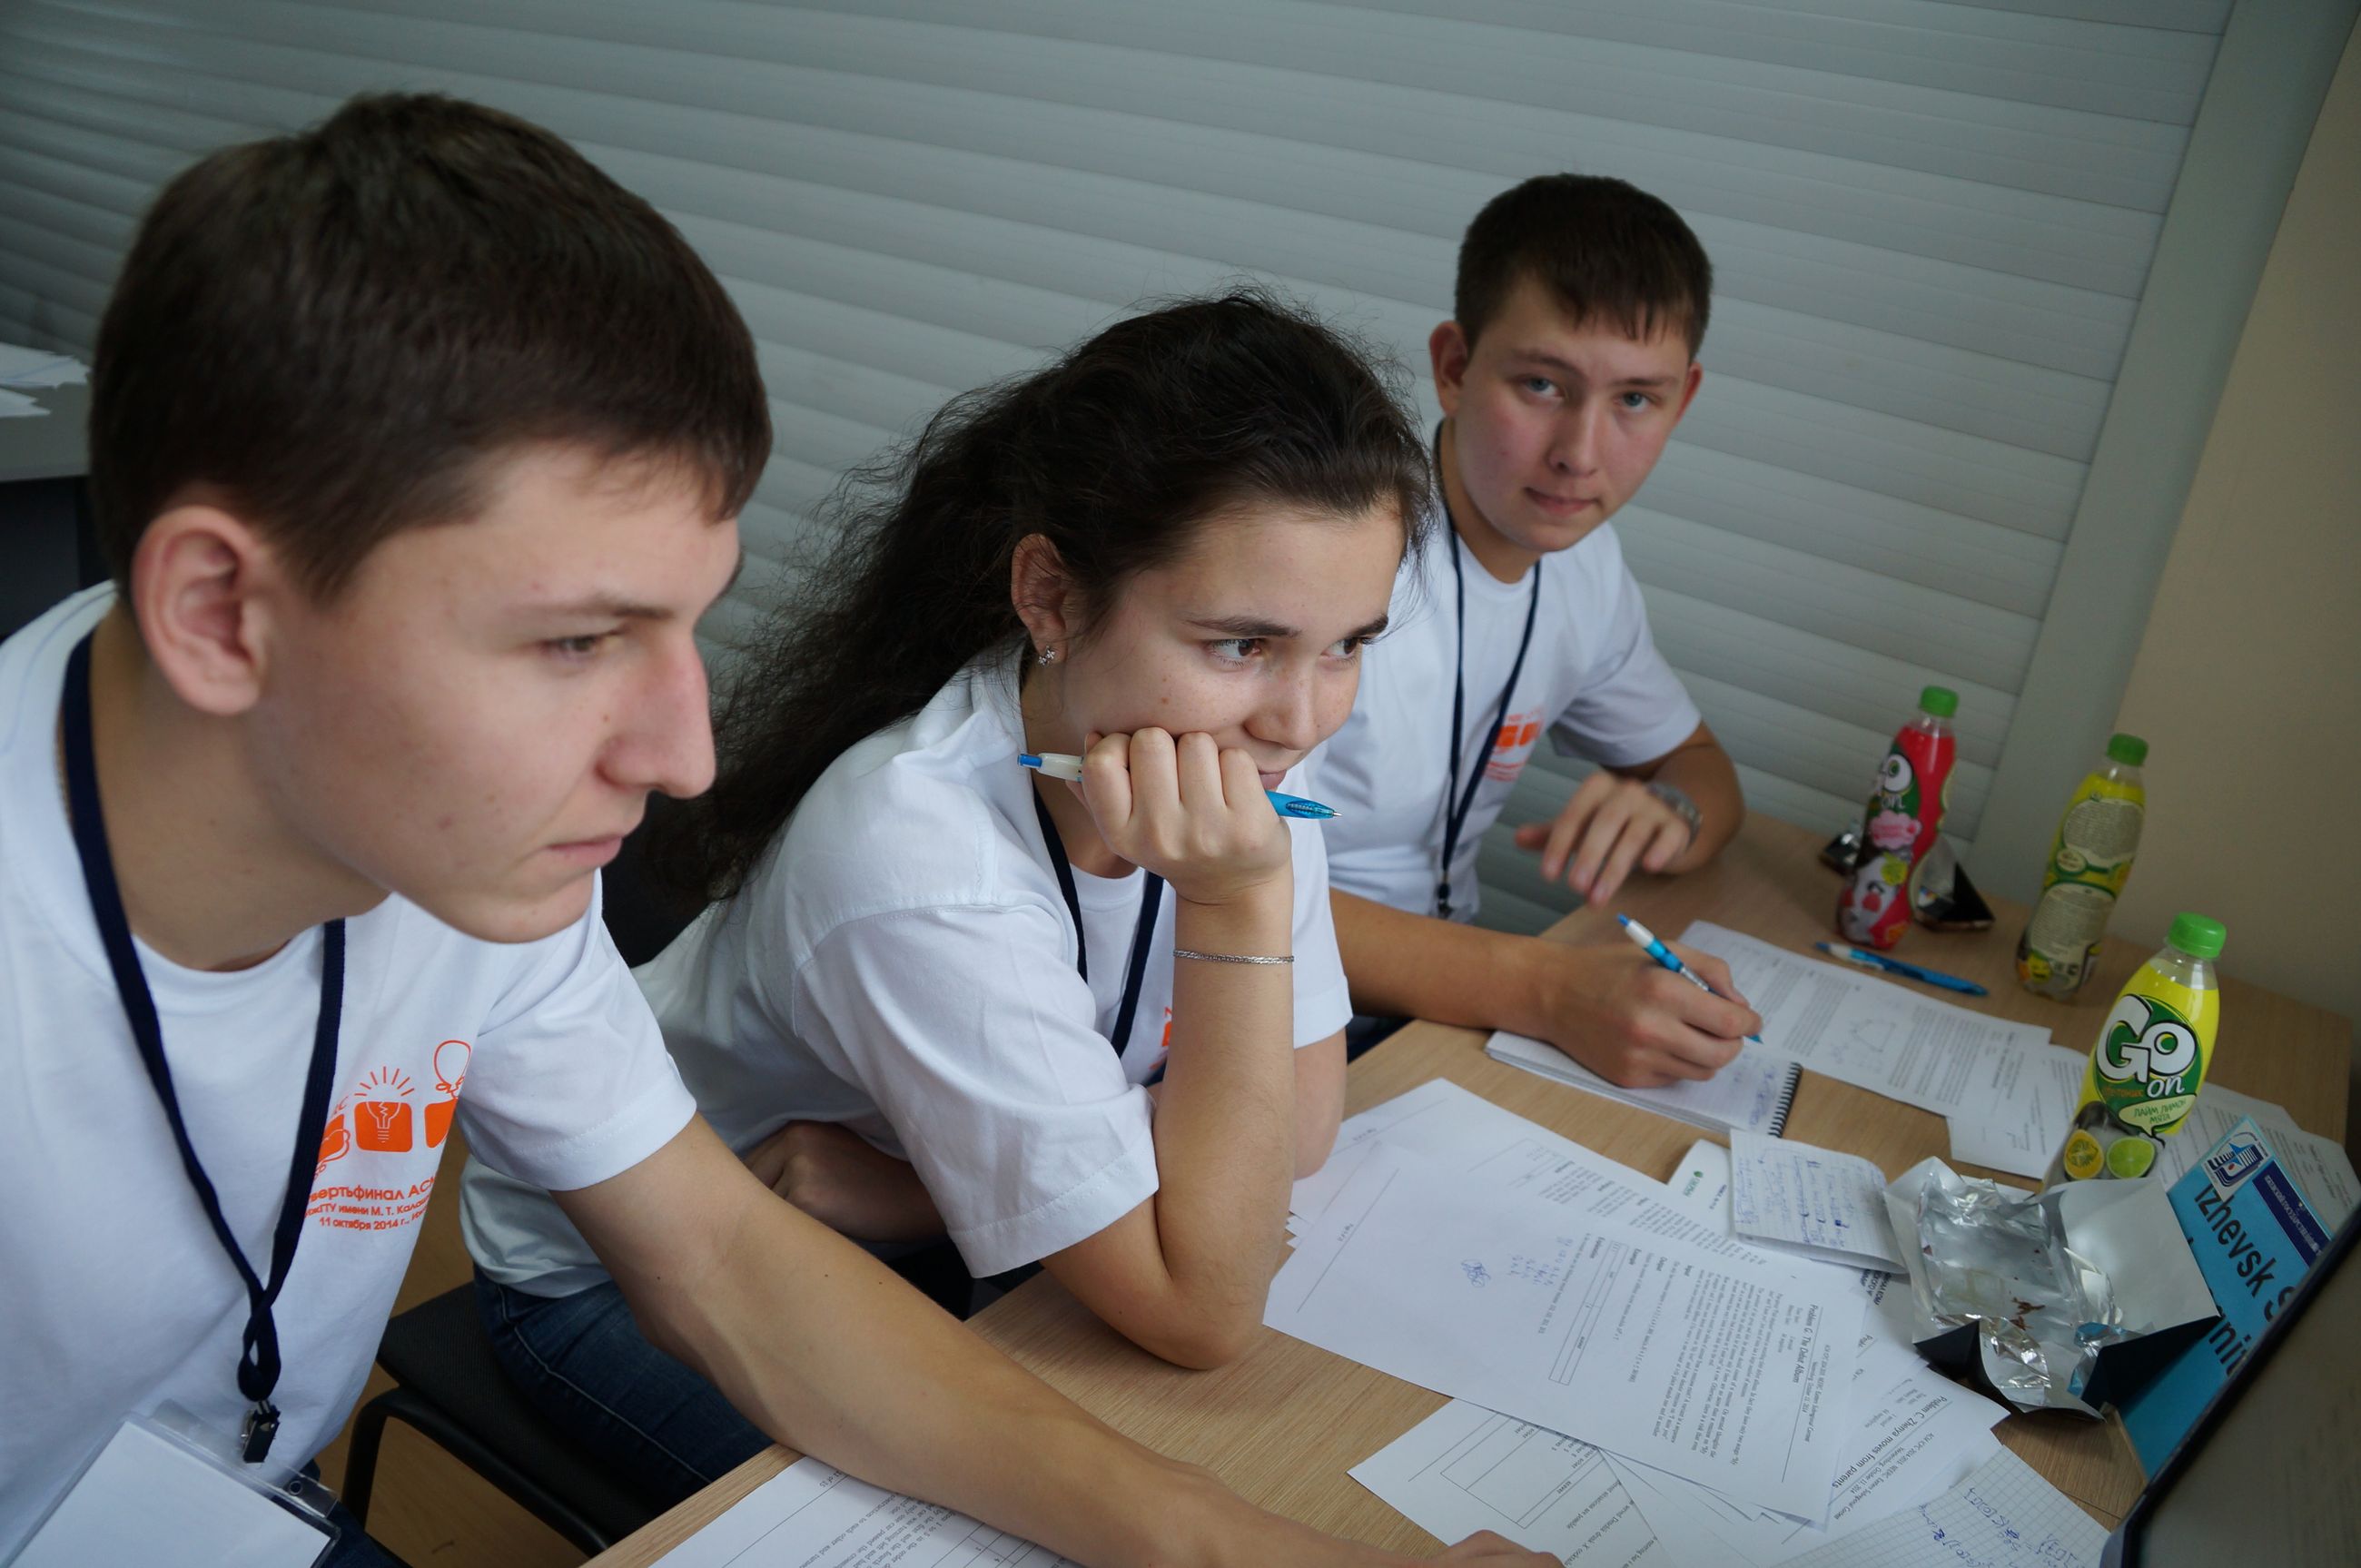 Quarter-final of the World Programming Championship took place at Kalashnikov Izhevsk State Technical University